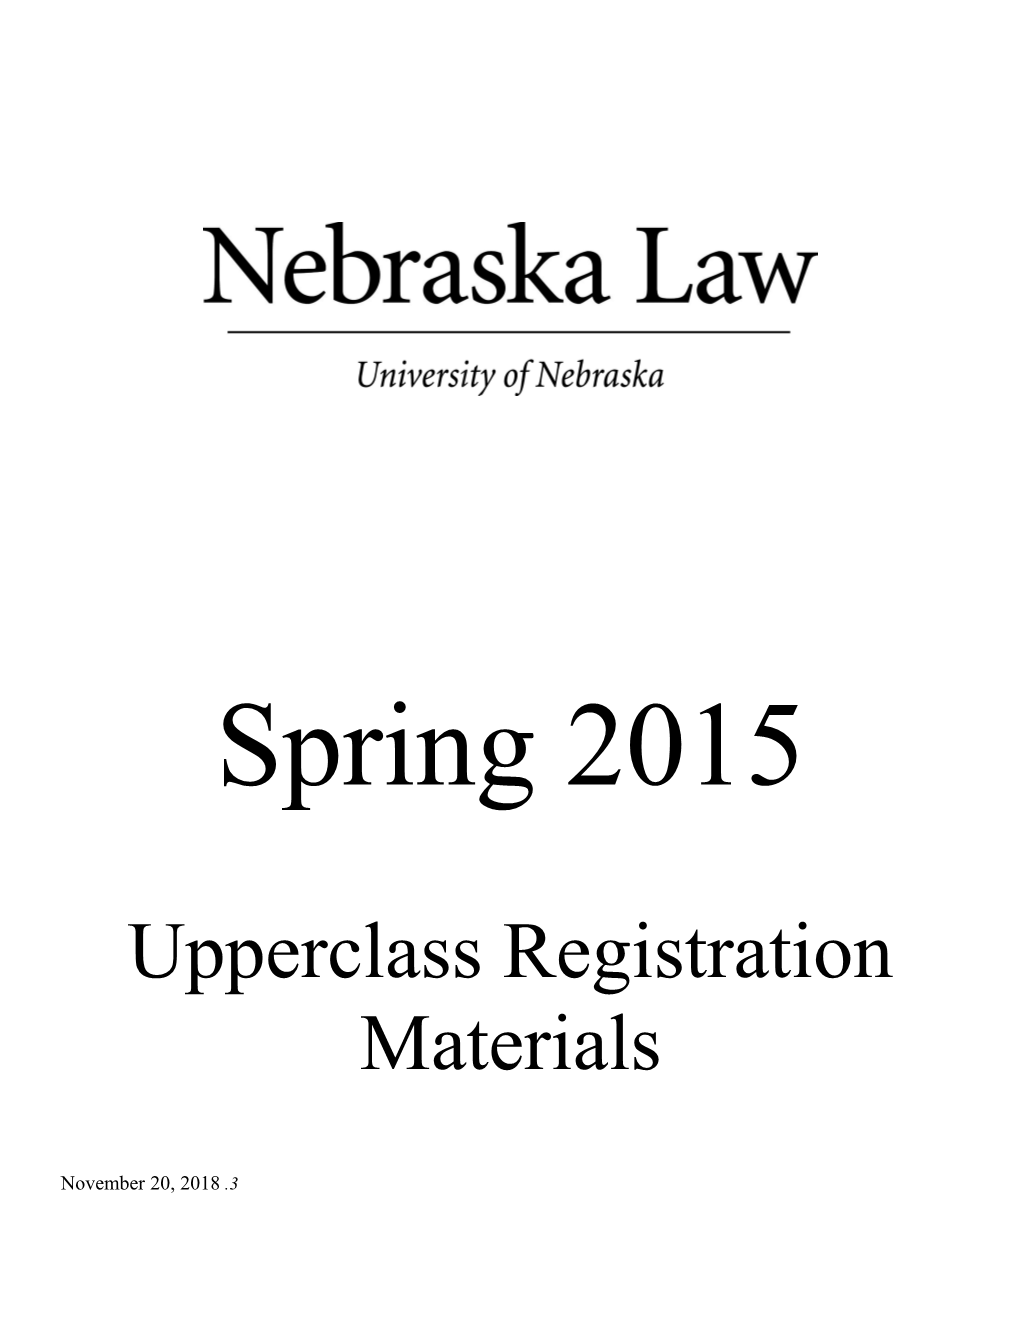 Upperclass Registration Materials